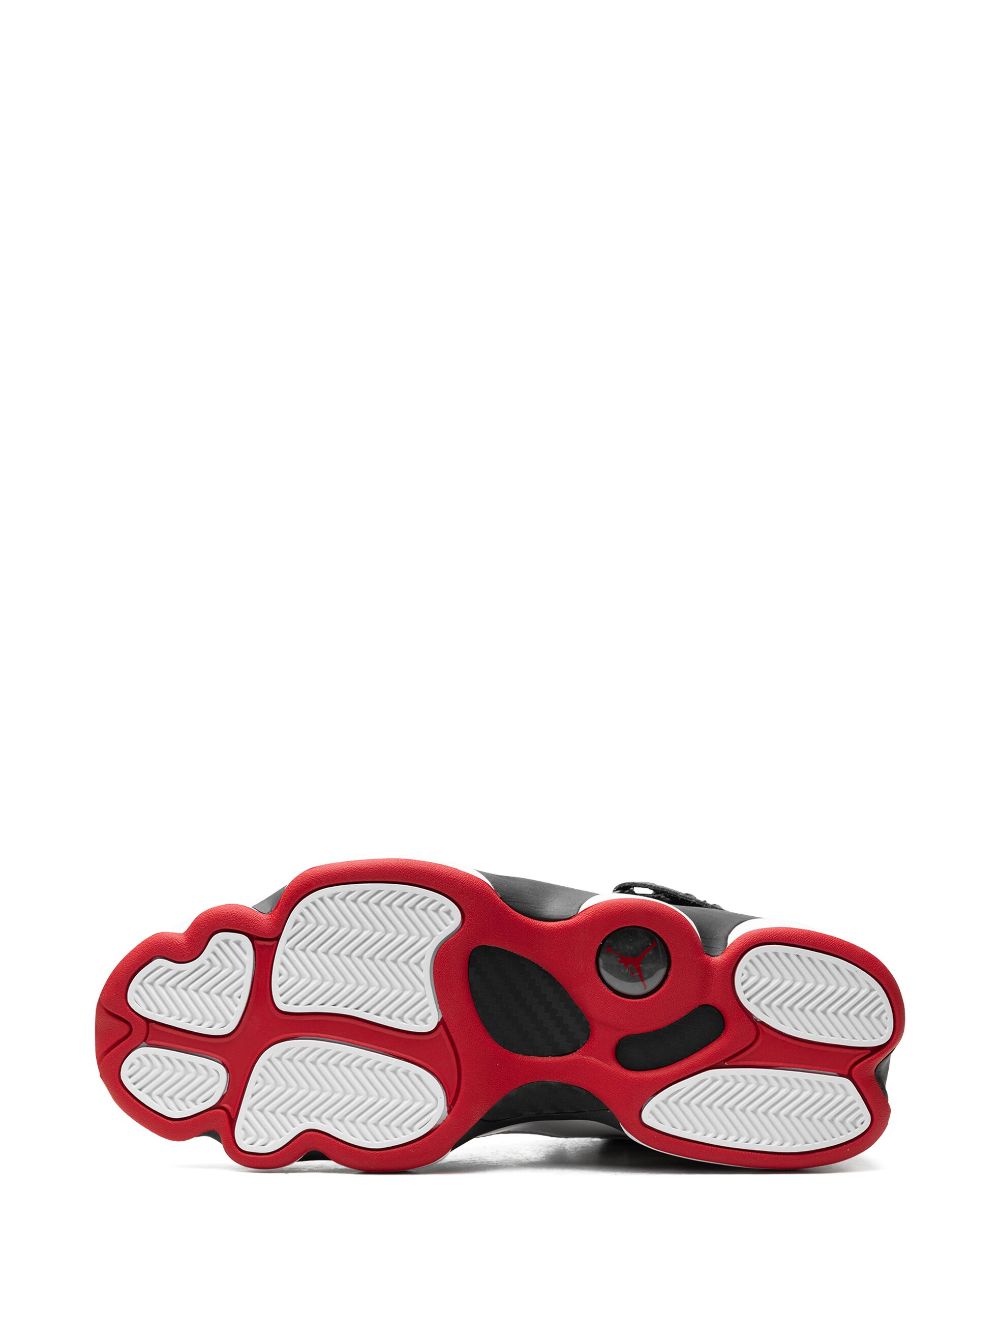 Shop Jordan 6 Rings "wht/blk/red" Sneakers In Black